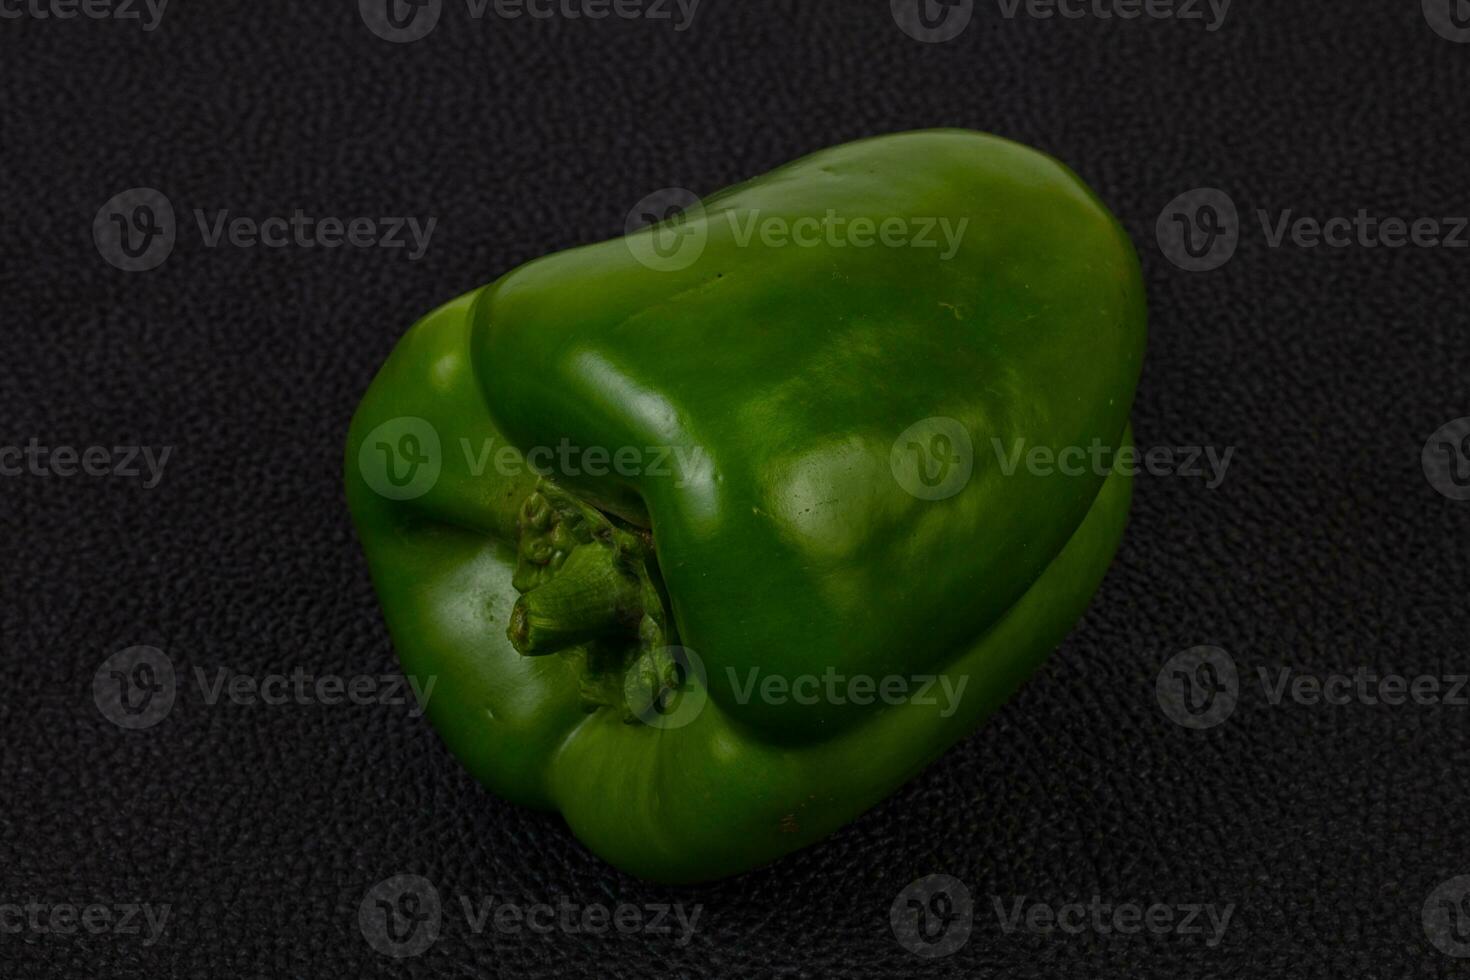 peperone verde maturo foto